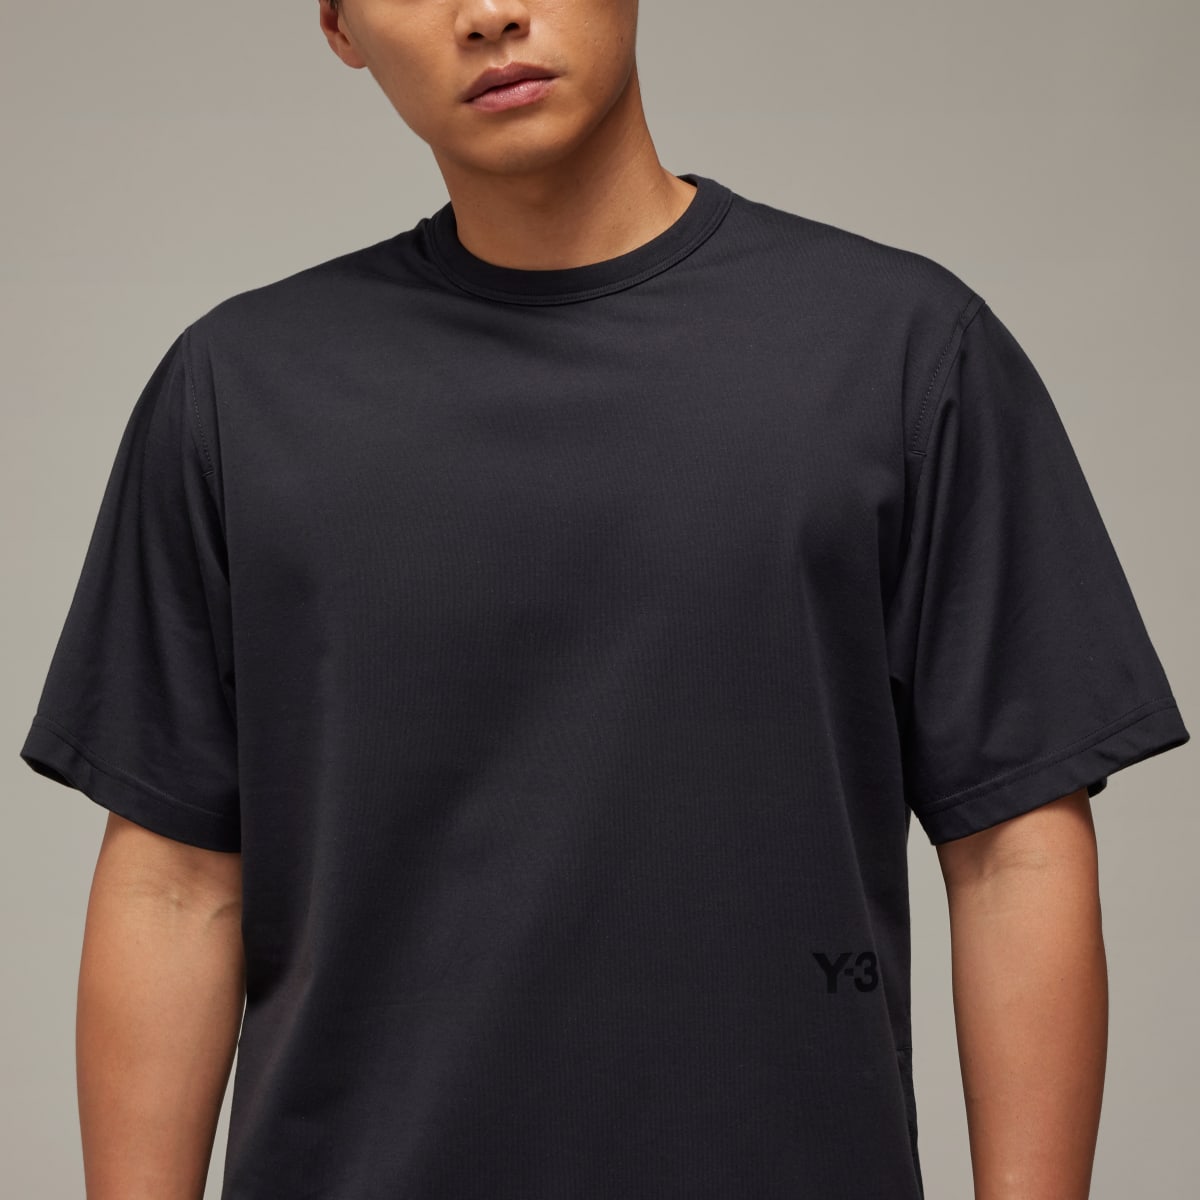 Adidas Y-3 Premium T-Shirt. 8